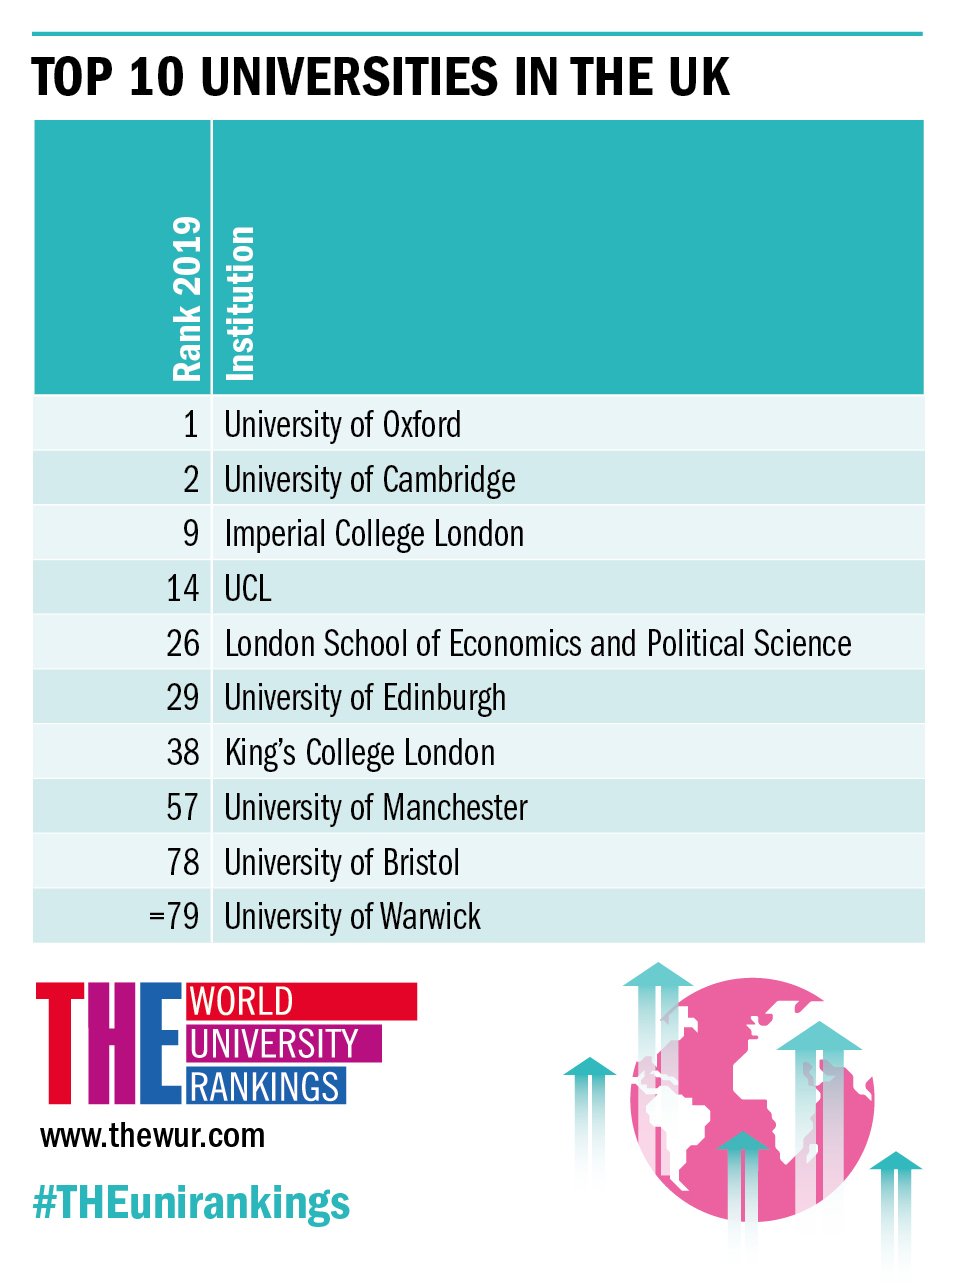 World University Rankings Twitter: "Top universities in the UK in our 2019 World University Rankings https://t.co/LhH9XrPXA2 #THEunirankings https://t.co/qARlKeHNHO" / Twitter